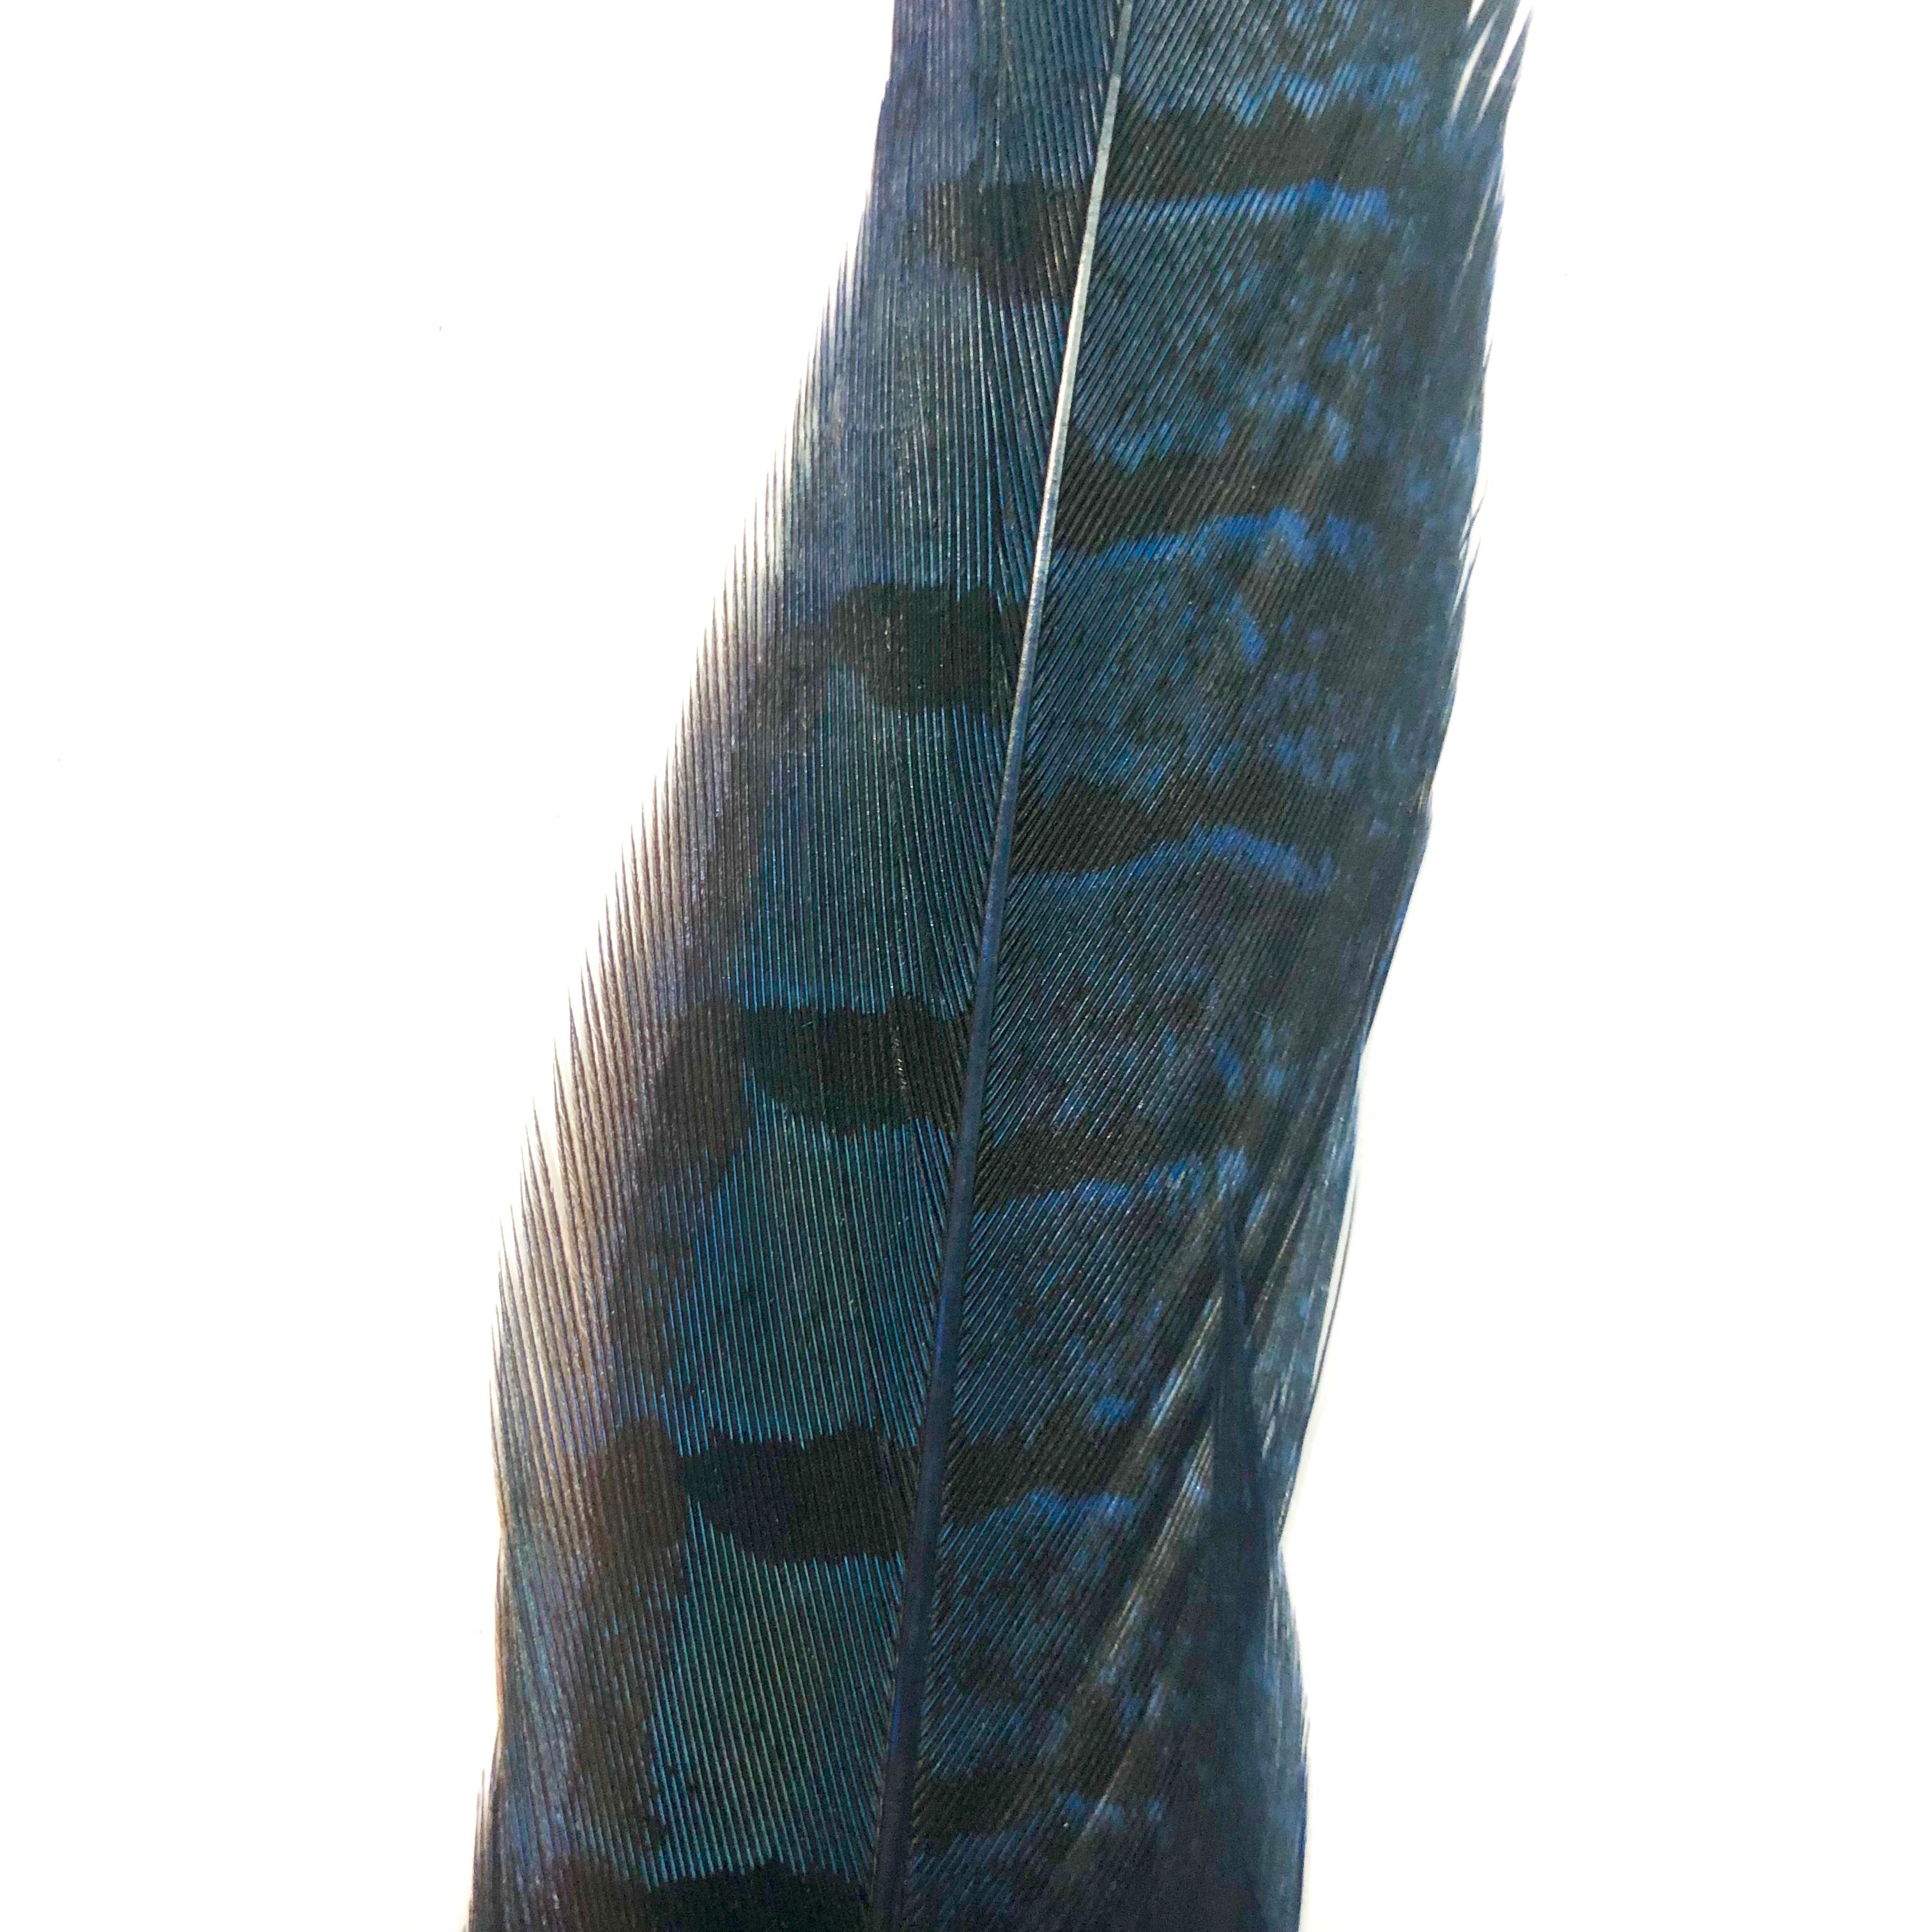 6" to 10" Ringneck Pheasant Tail Feather x 10 pcs - Royal Blue